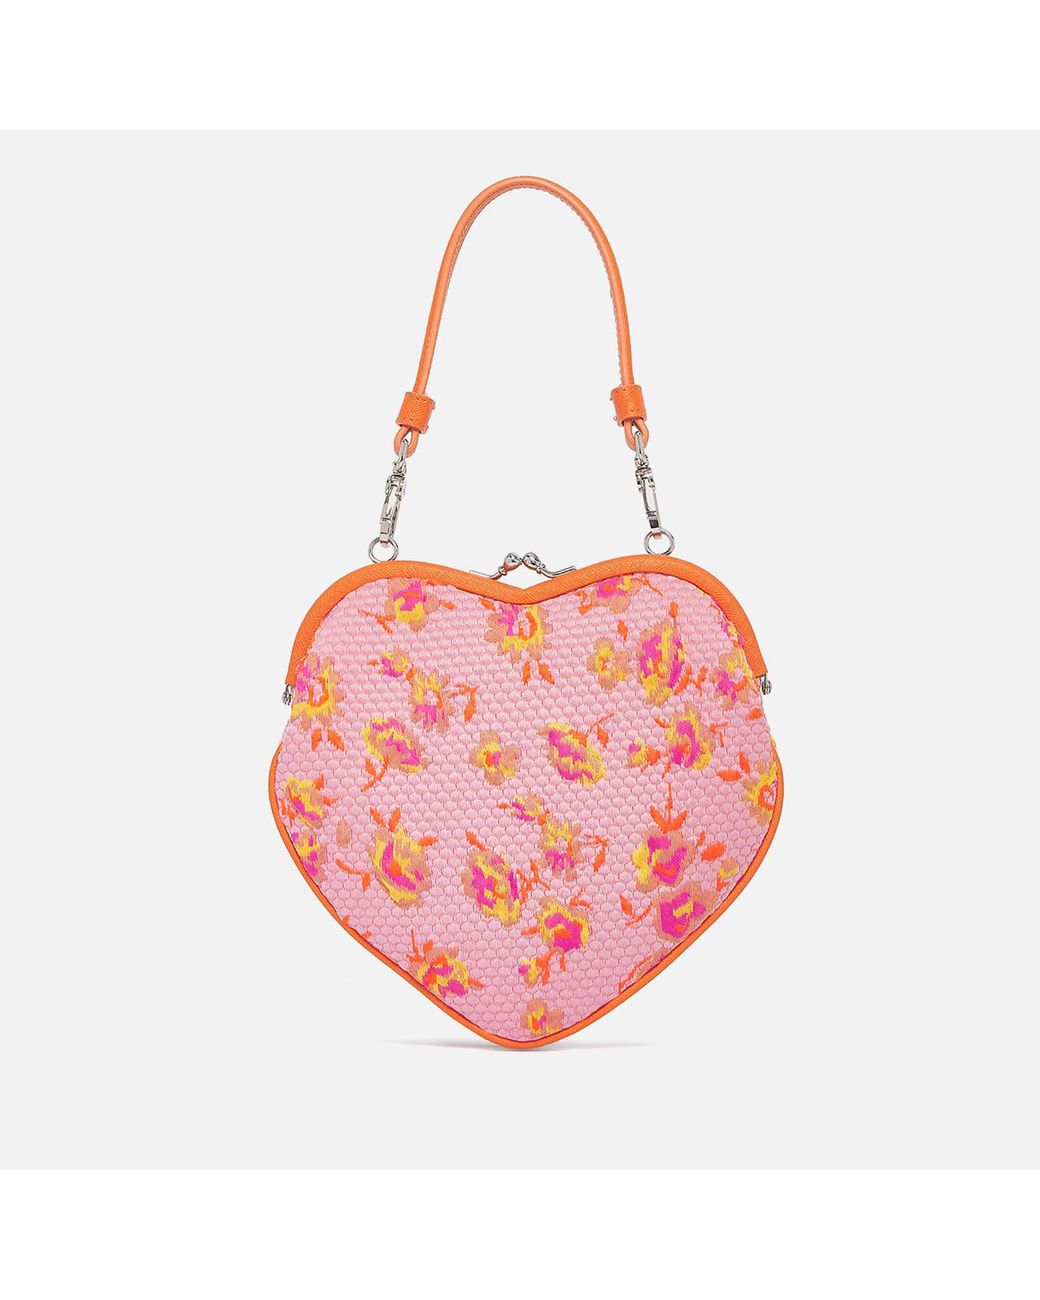 Vivienne Westwood Heart Frame Handbag -  New Zealand